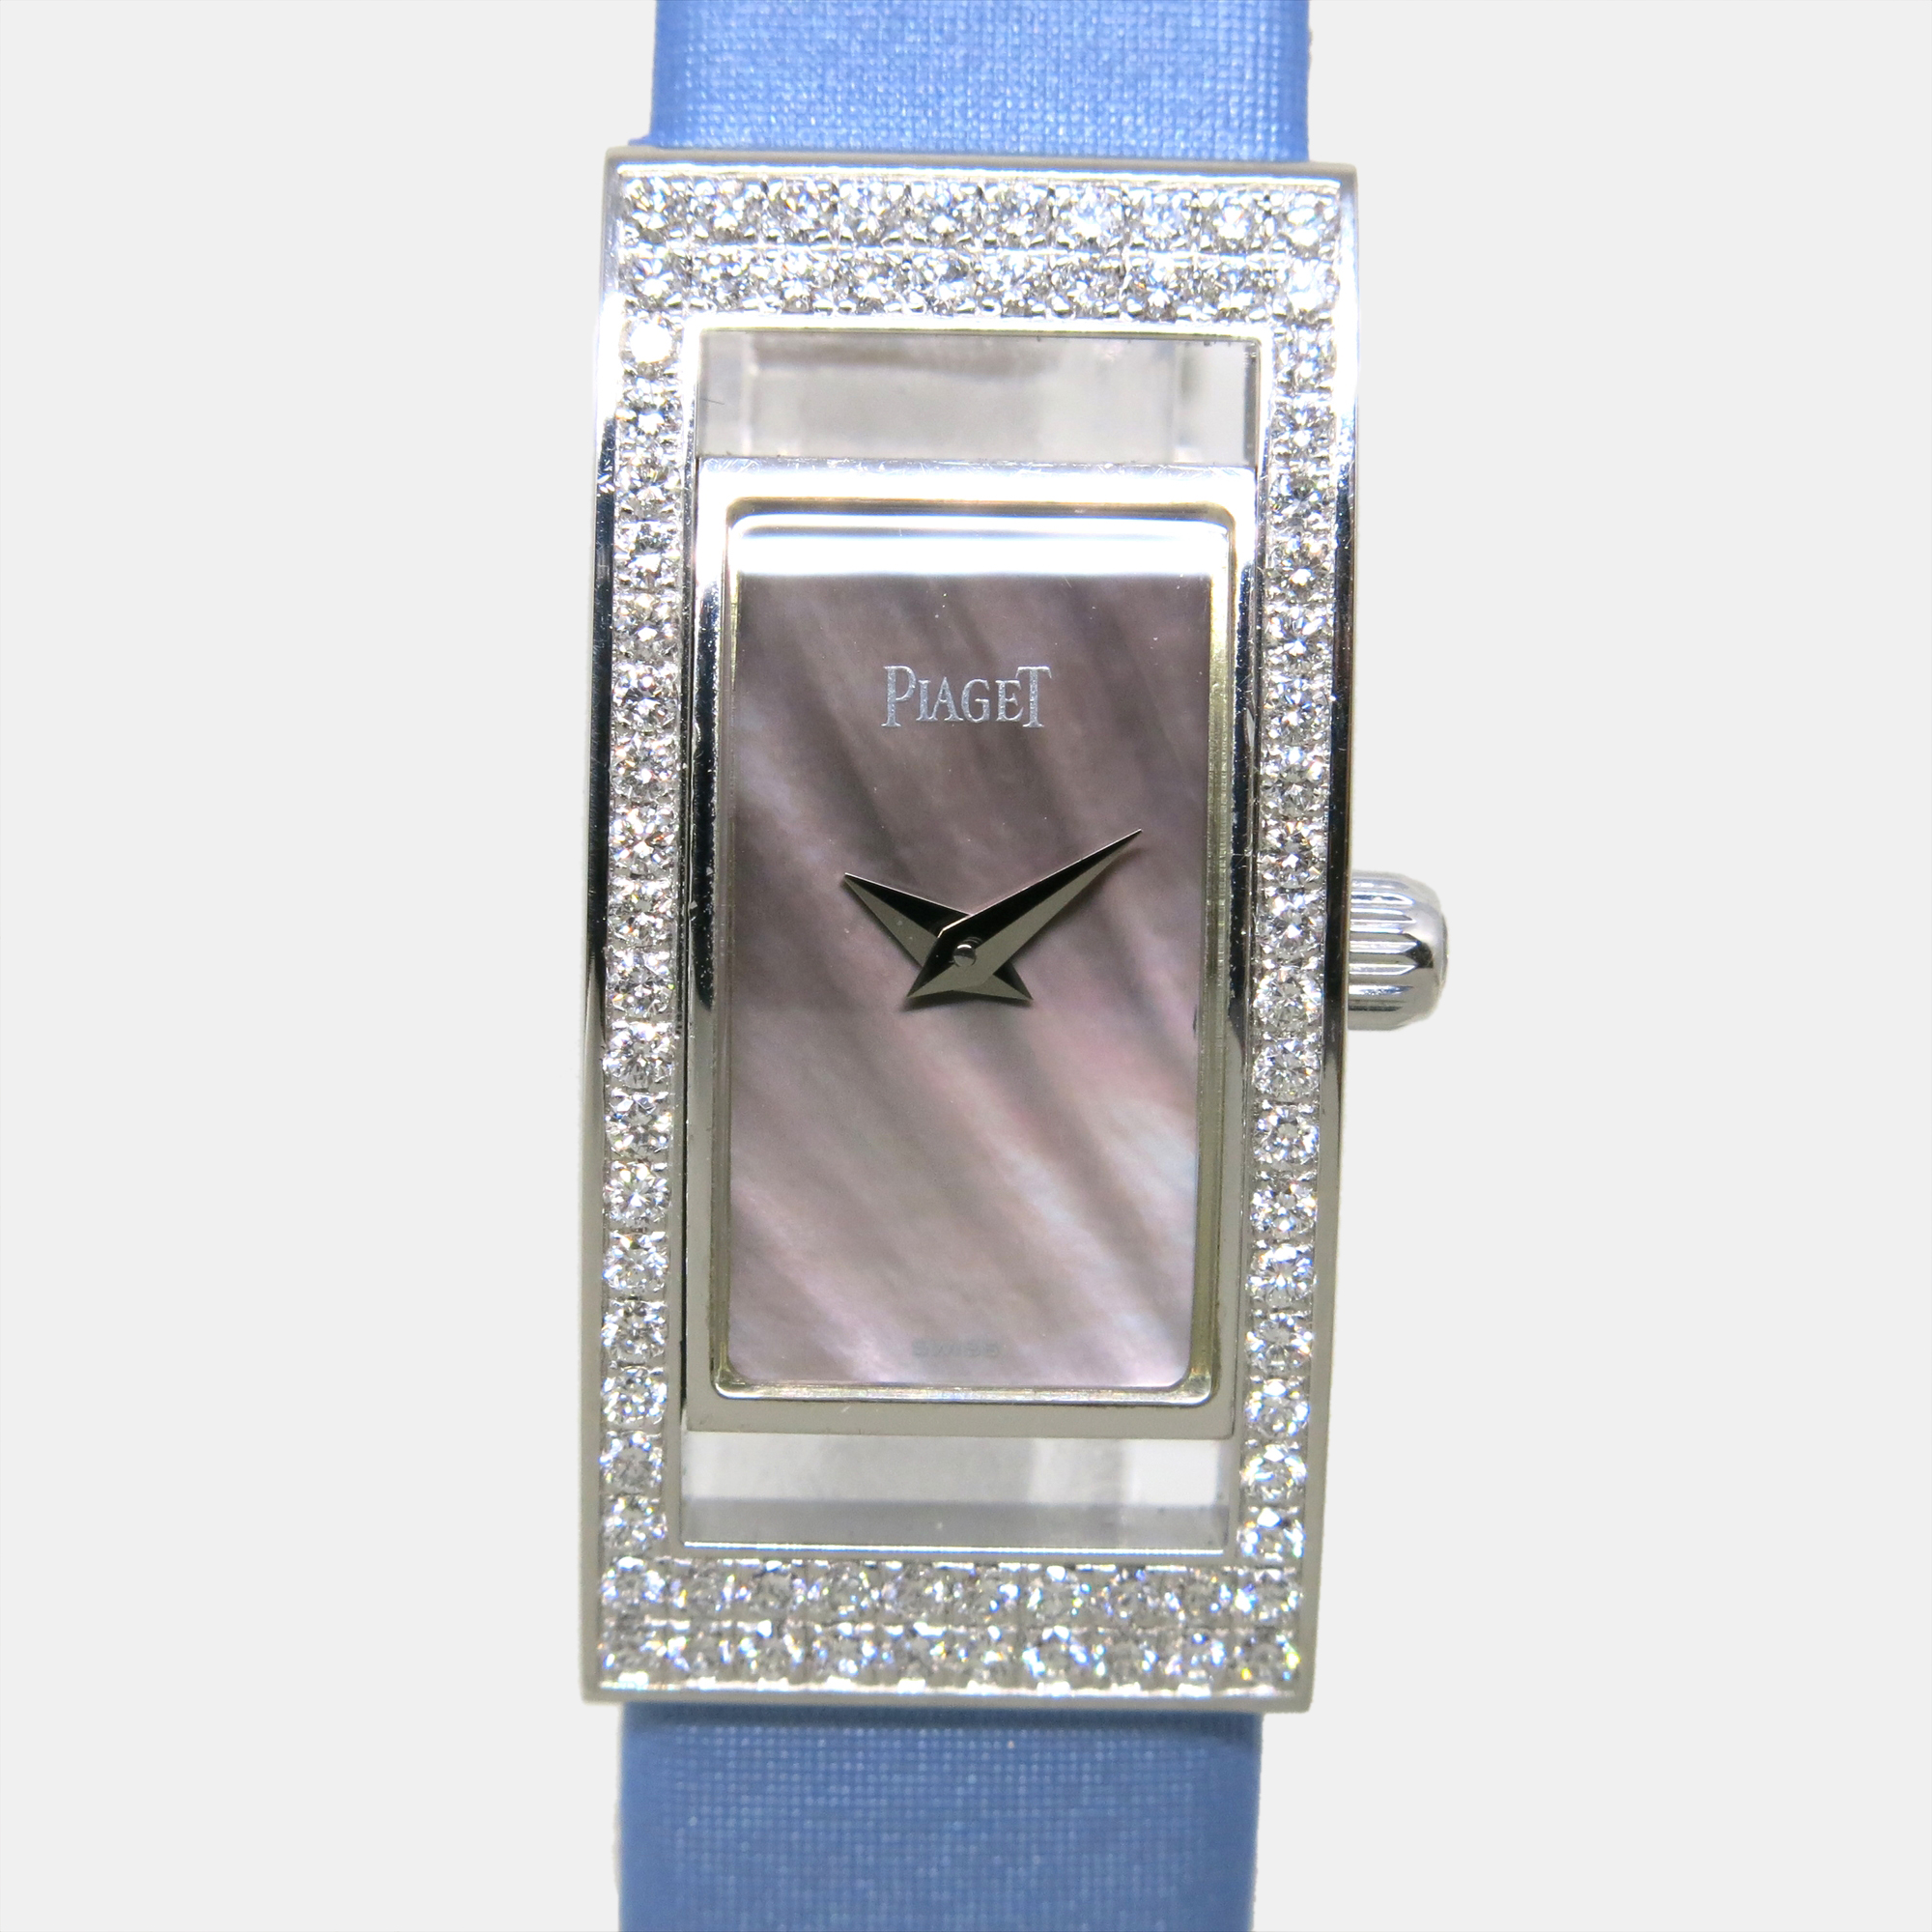 Piaget shell dial white gold limelight rectangular 54025 women's watch 16 mm